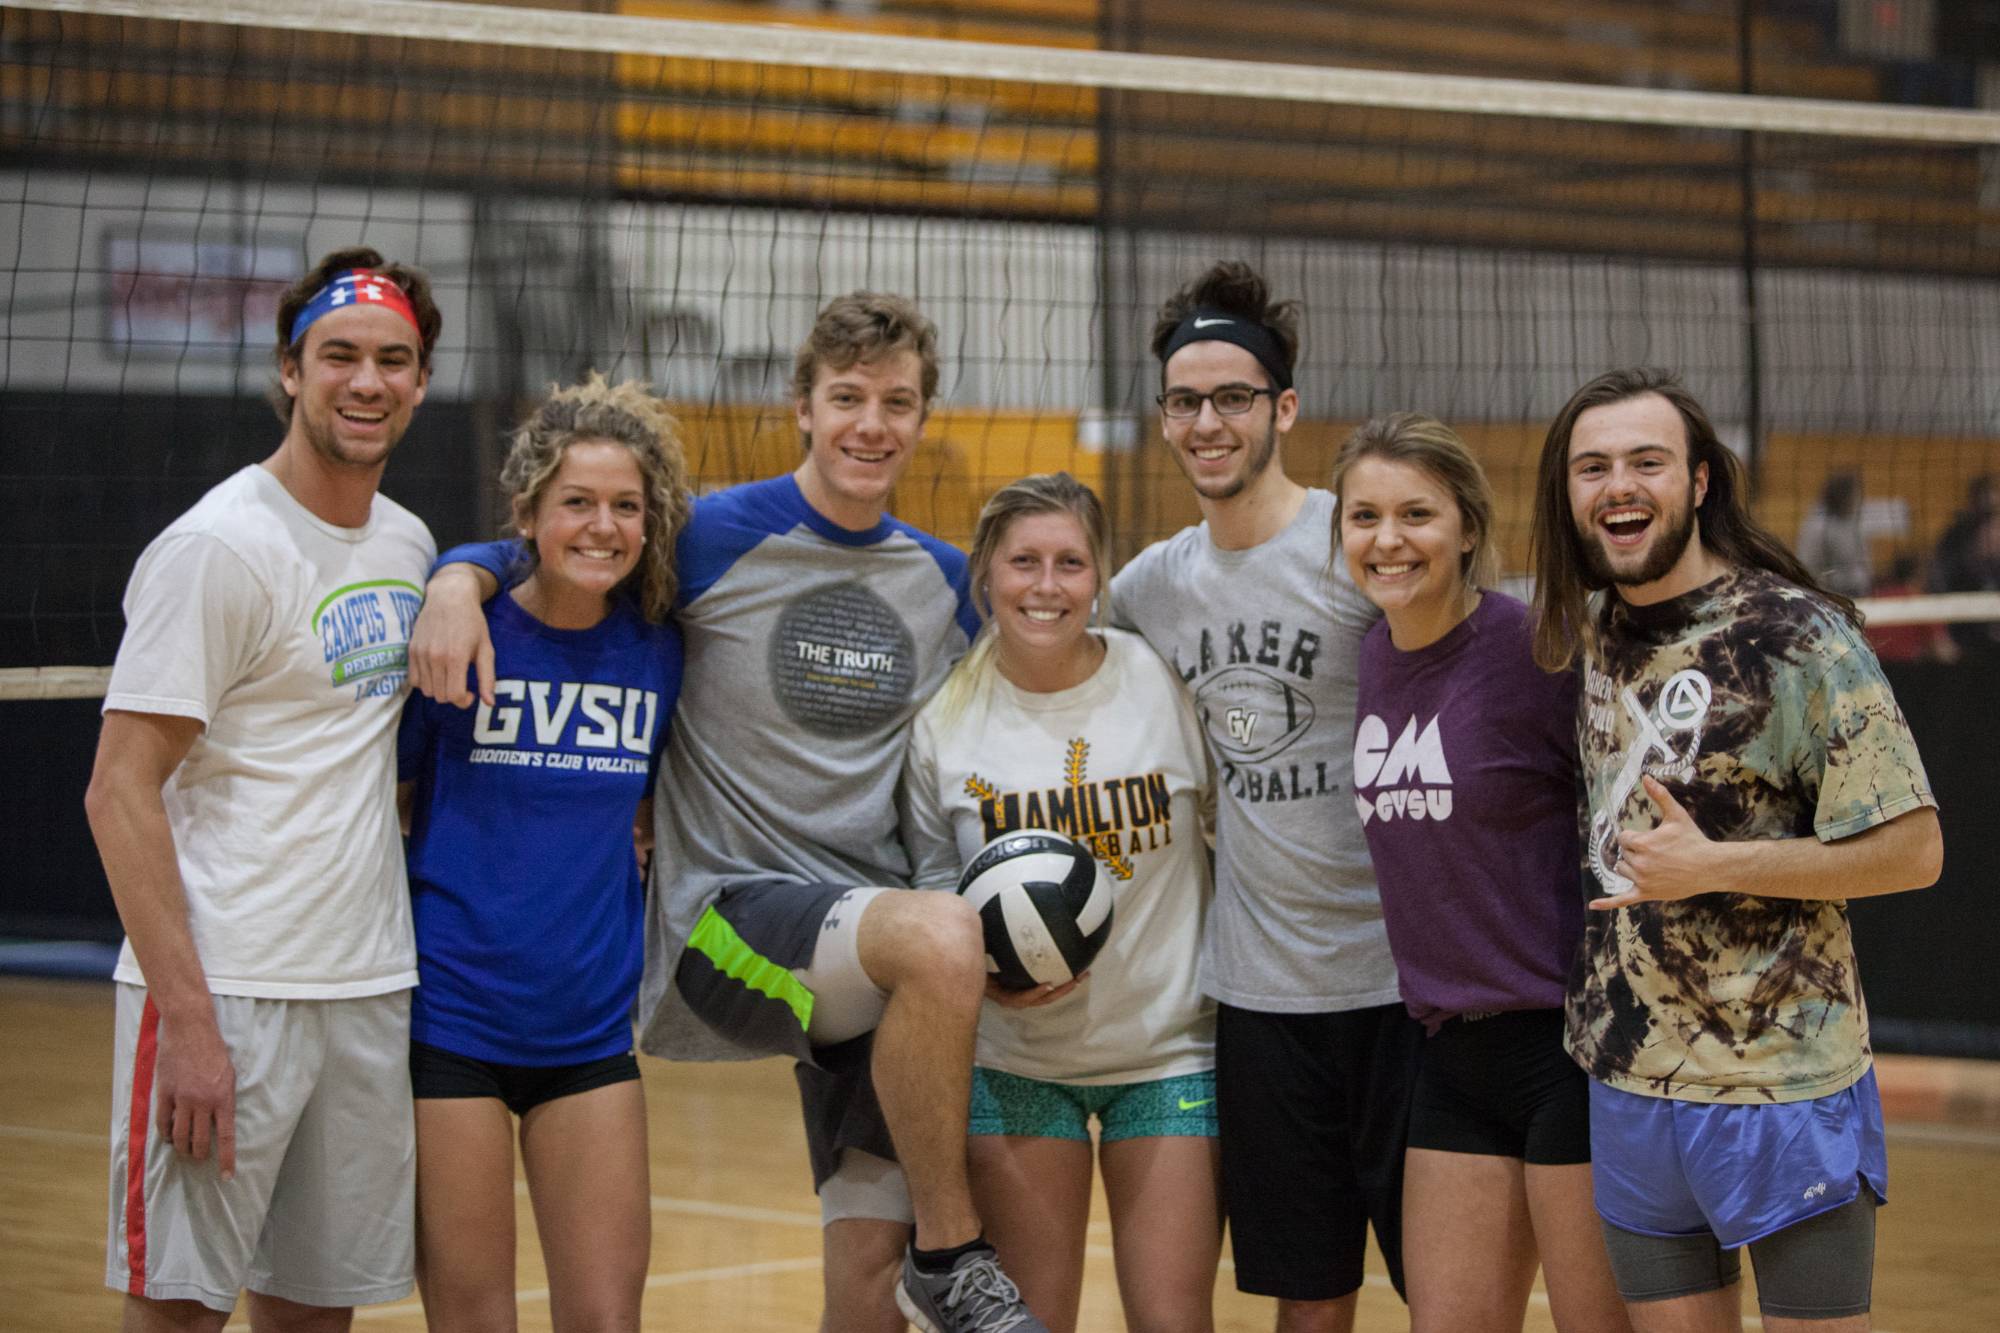 GVSU students playing intramural volleyball